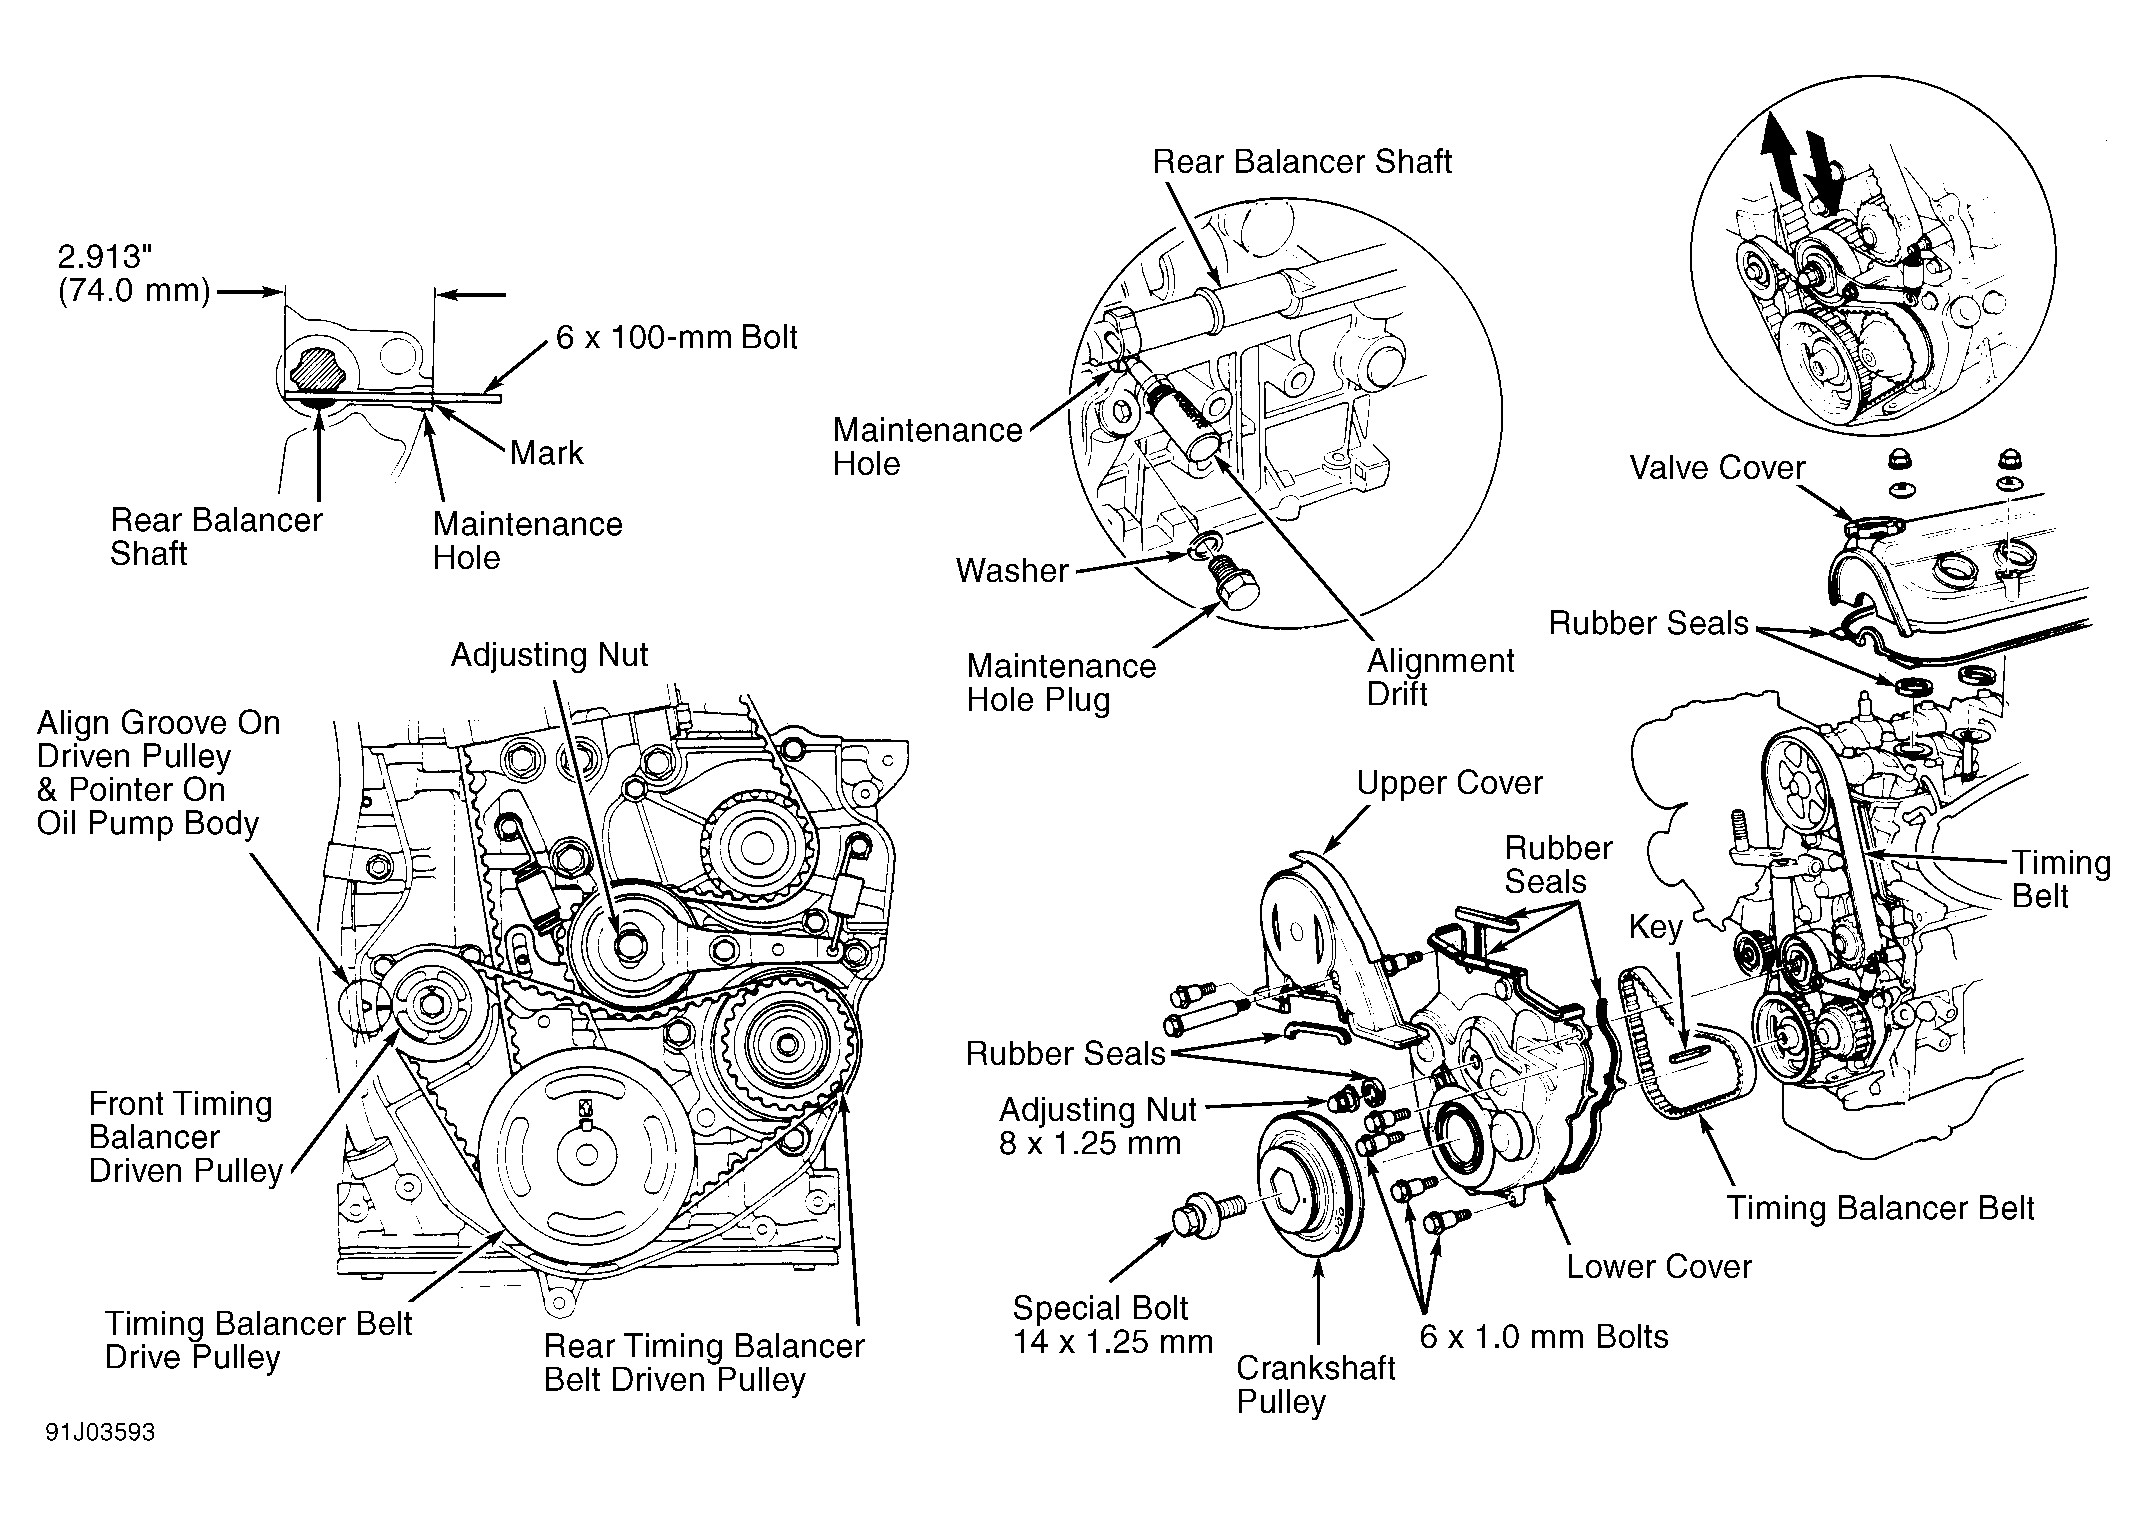 1998 Honda Accord V6 Engine Diagram 91 Honda Accord Fuse Box Of 1998 Honda Accord V6 Engine Diagram